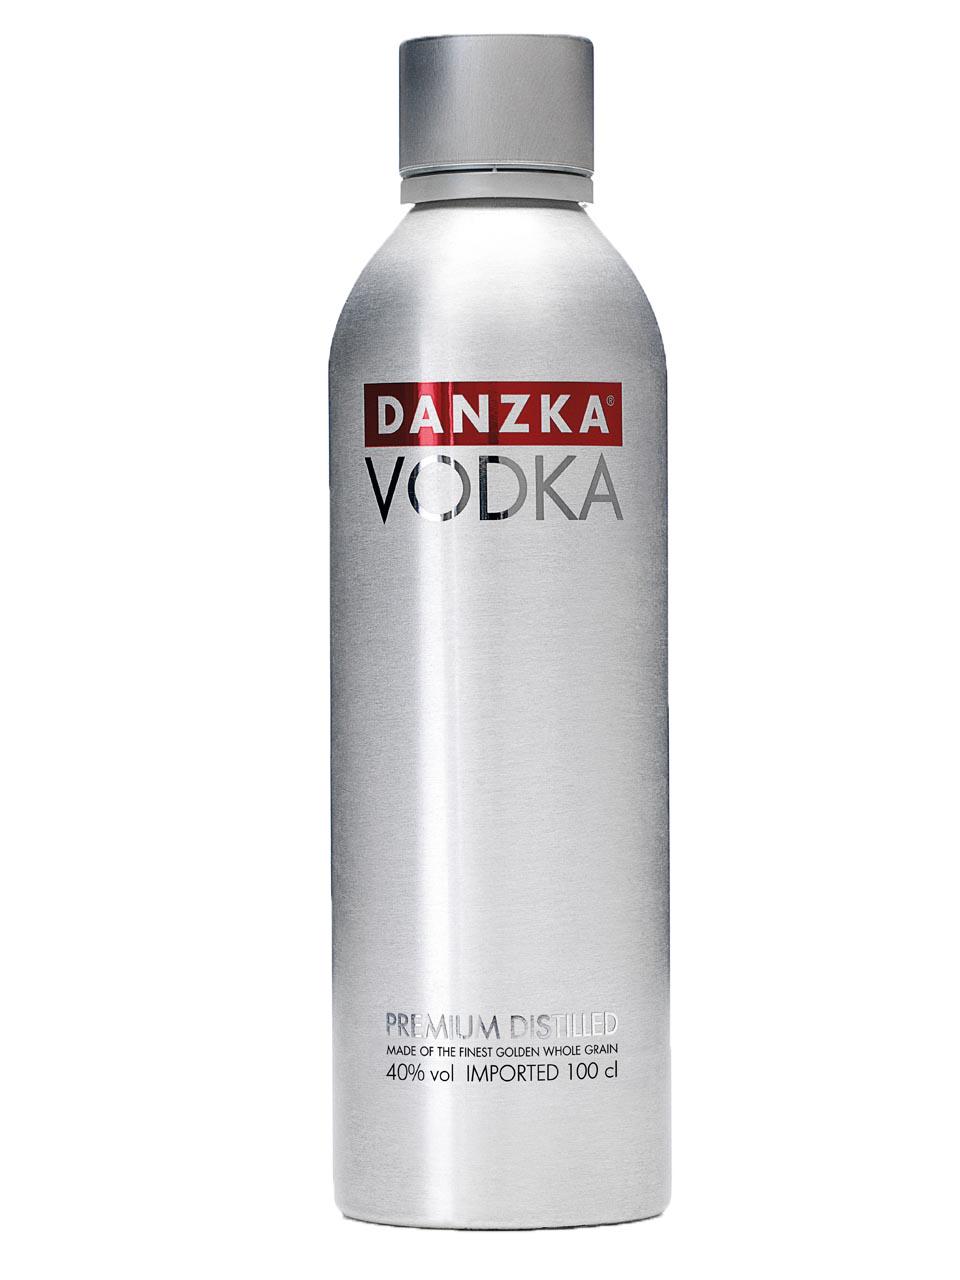 Danzka Vodka 40% 1L Frankfurt Airport Online Shopping 